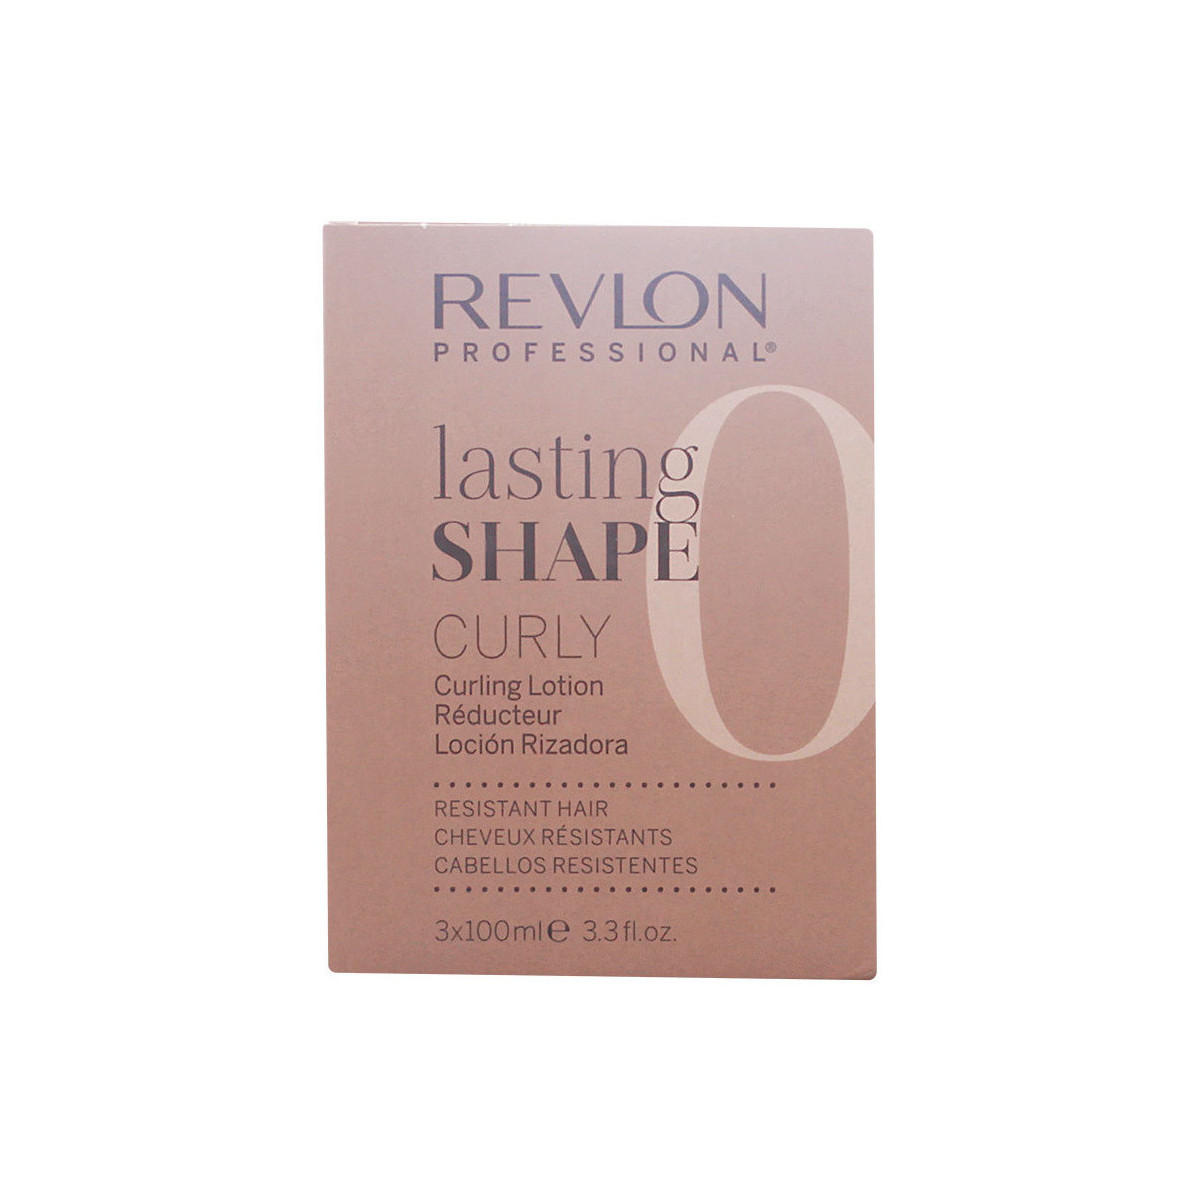 Belleza Fijadores Revlon Lasting Shape Curly Resistent Hair Cream 